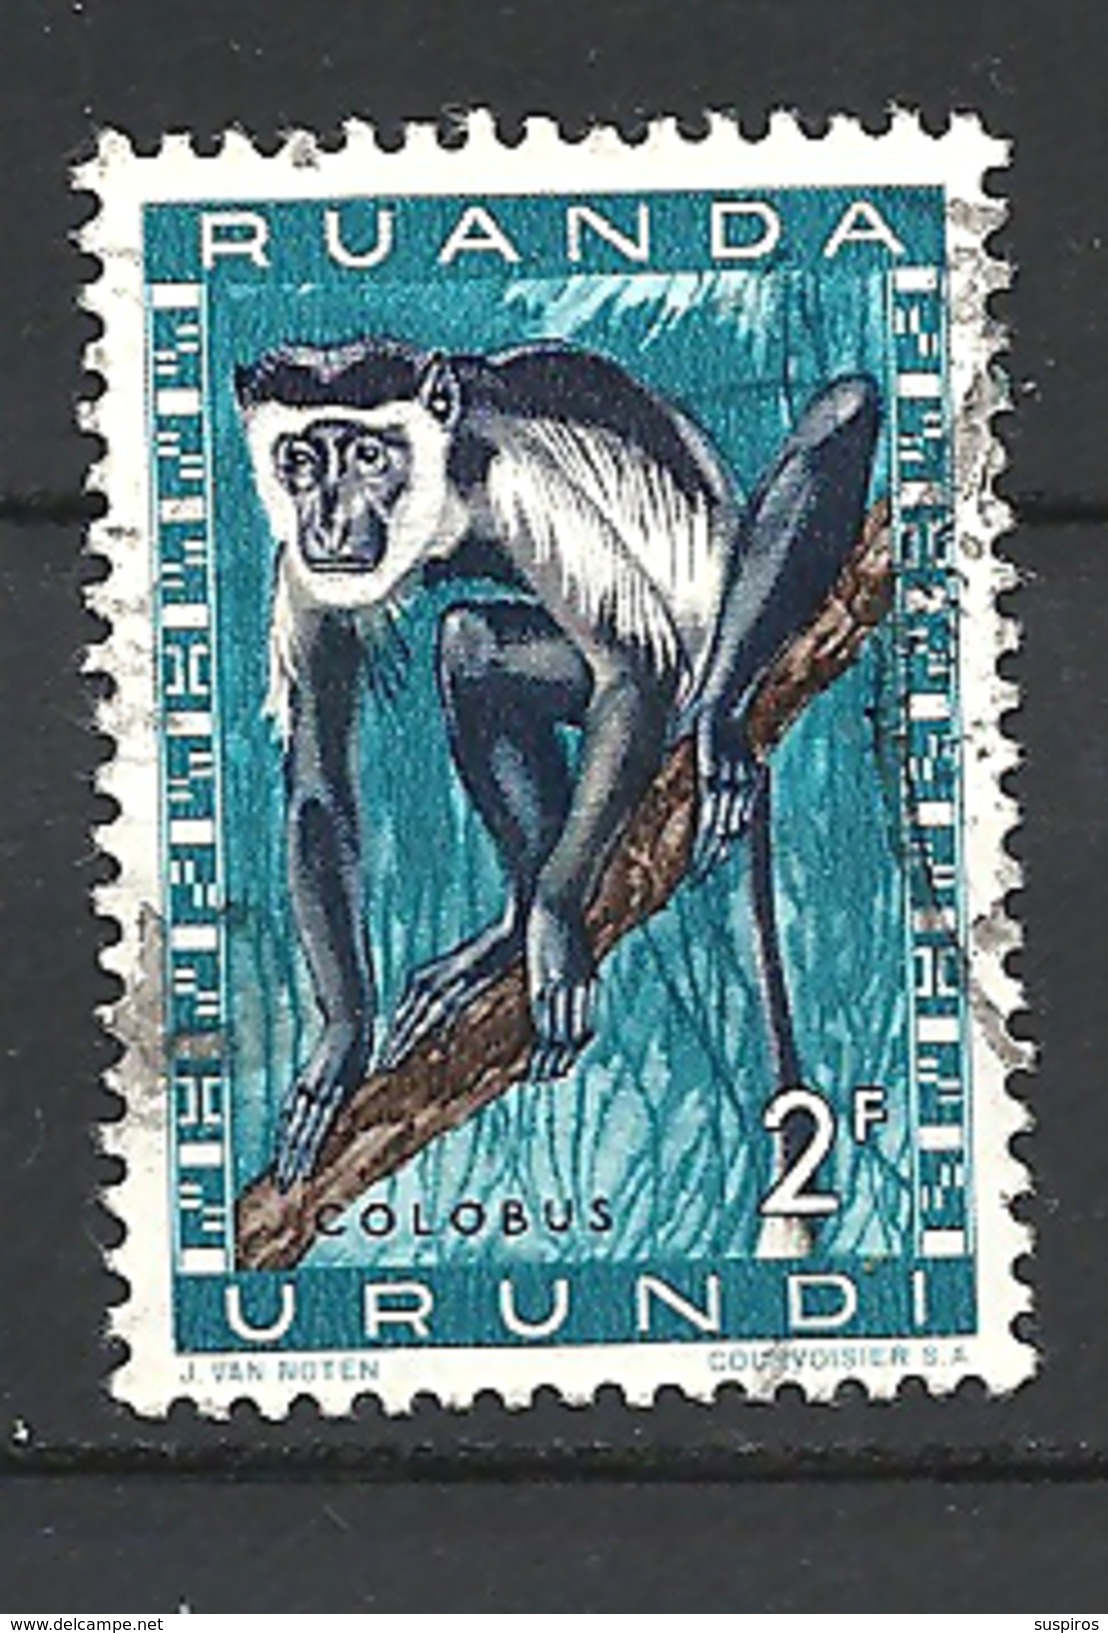 RUANDA URUNDI - 1959 Fauna Colobus Sp. USED - Used Stamps